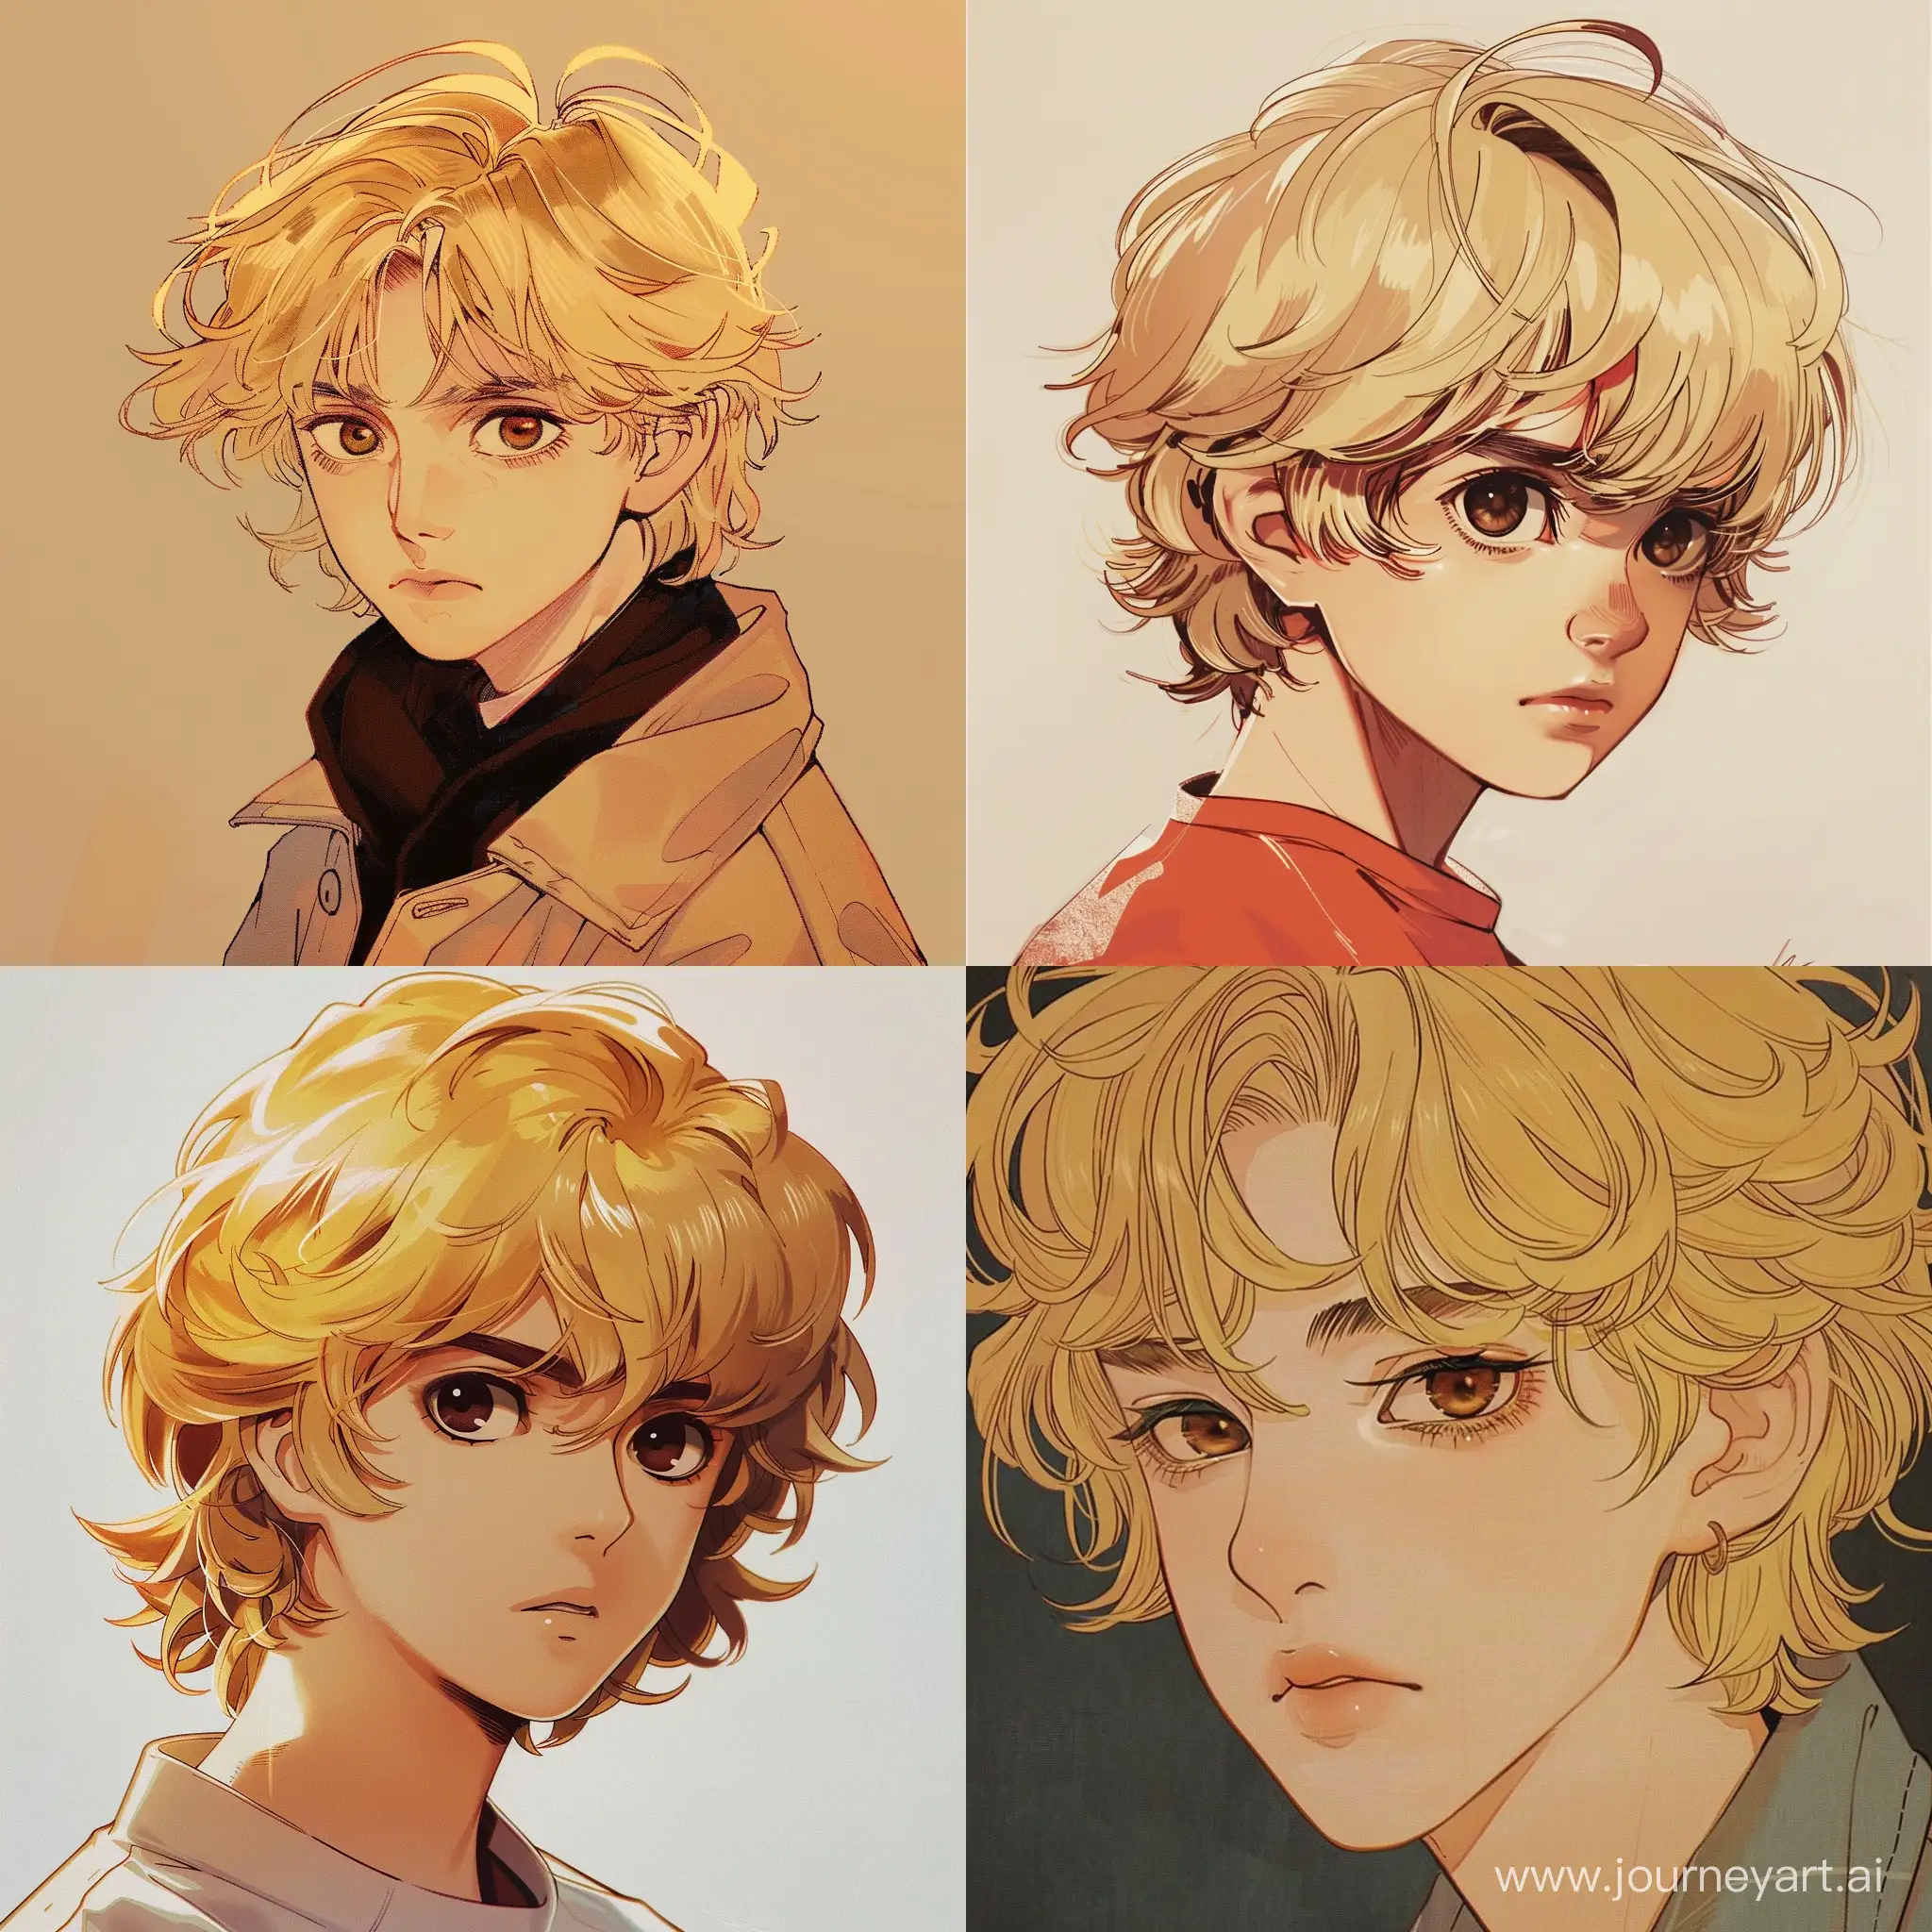 80s anime style, blonde boy, brown eyes, retro style